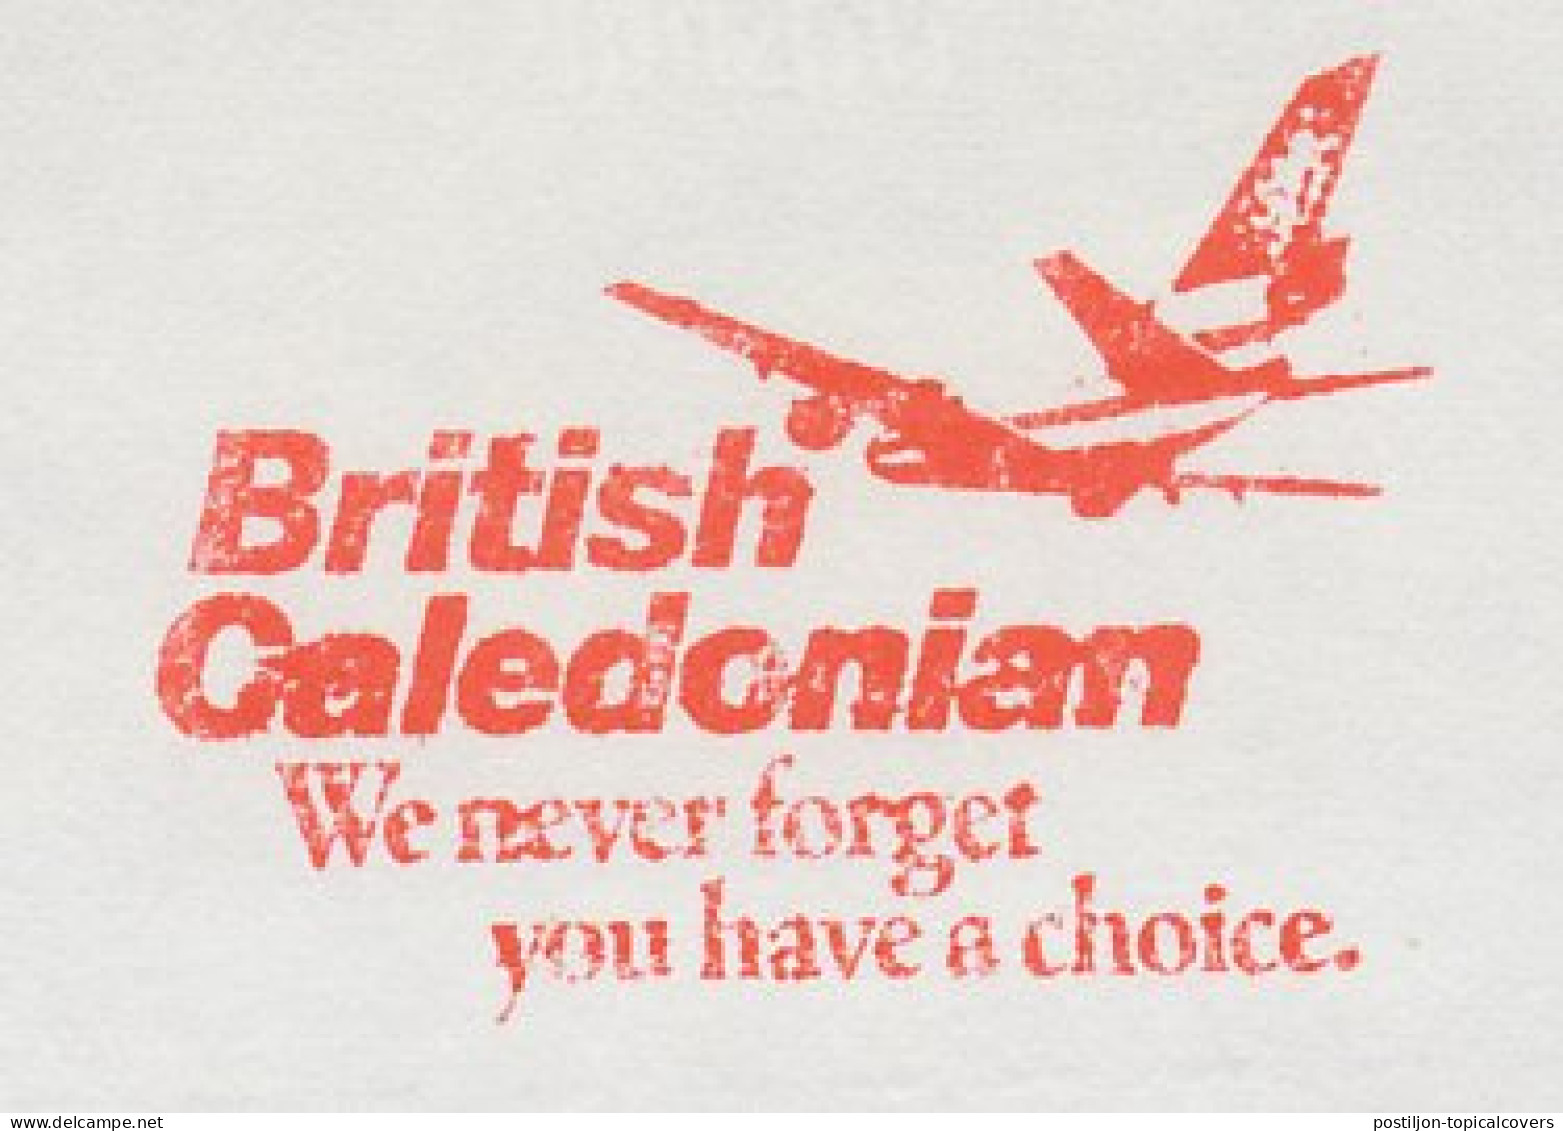 Meter Cut Netherlands 1982 British Caledonian Airline - Avions